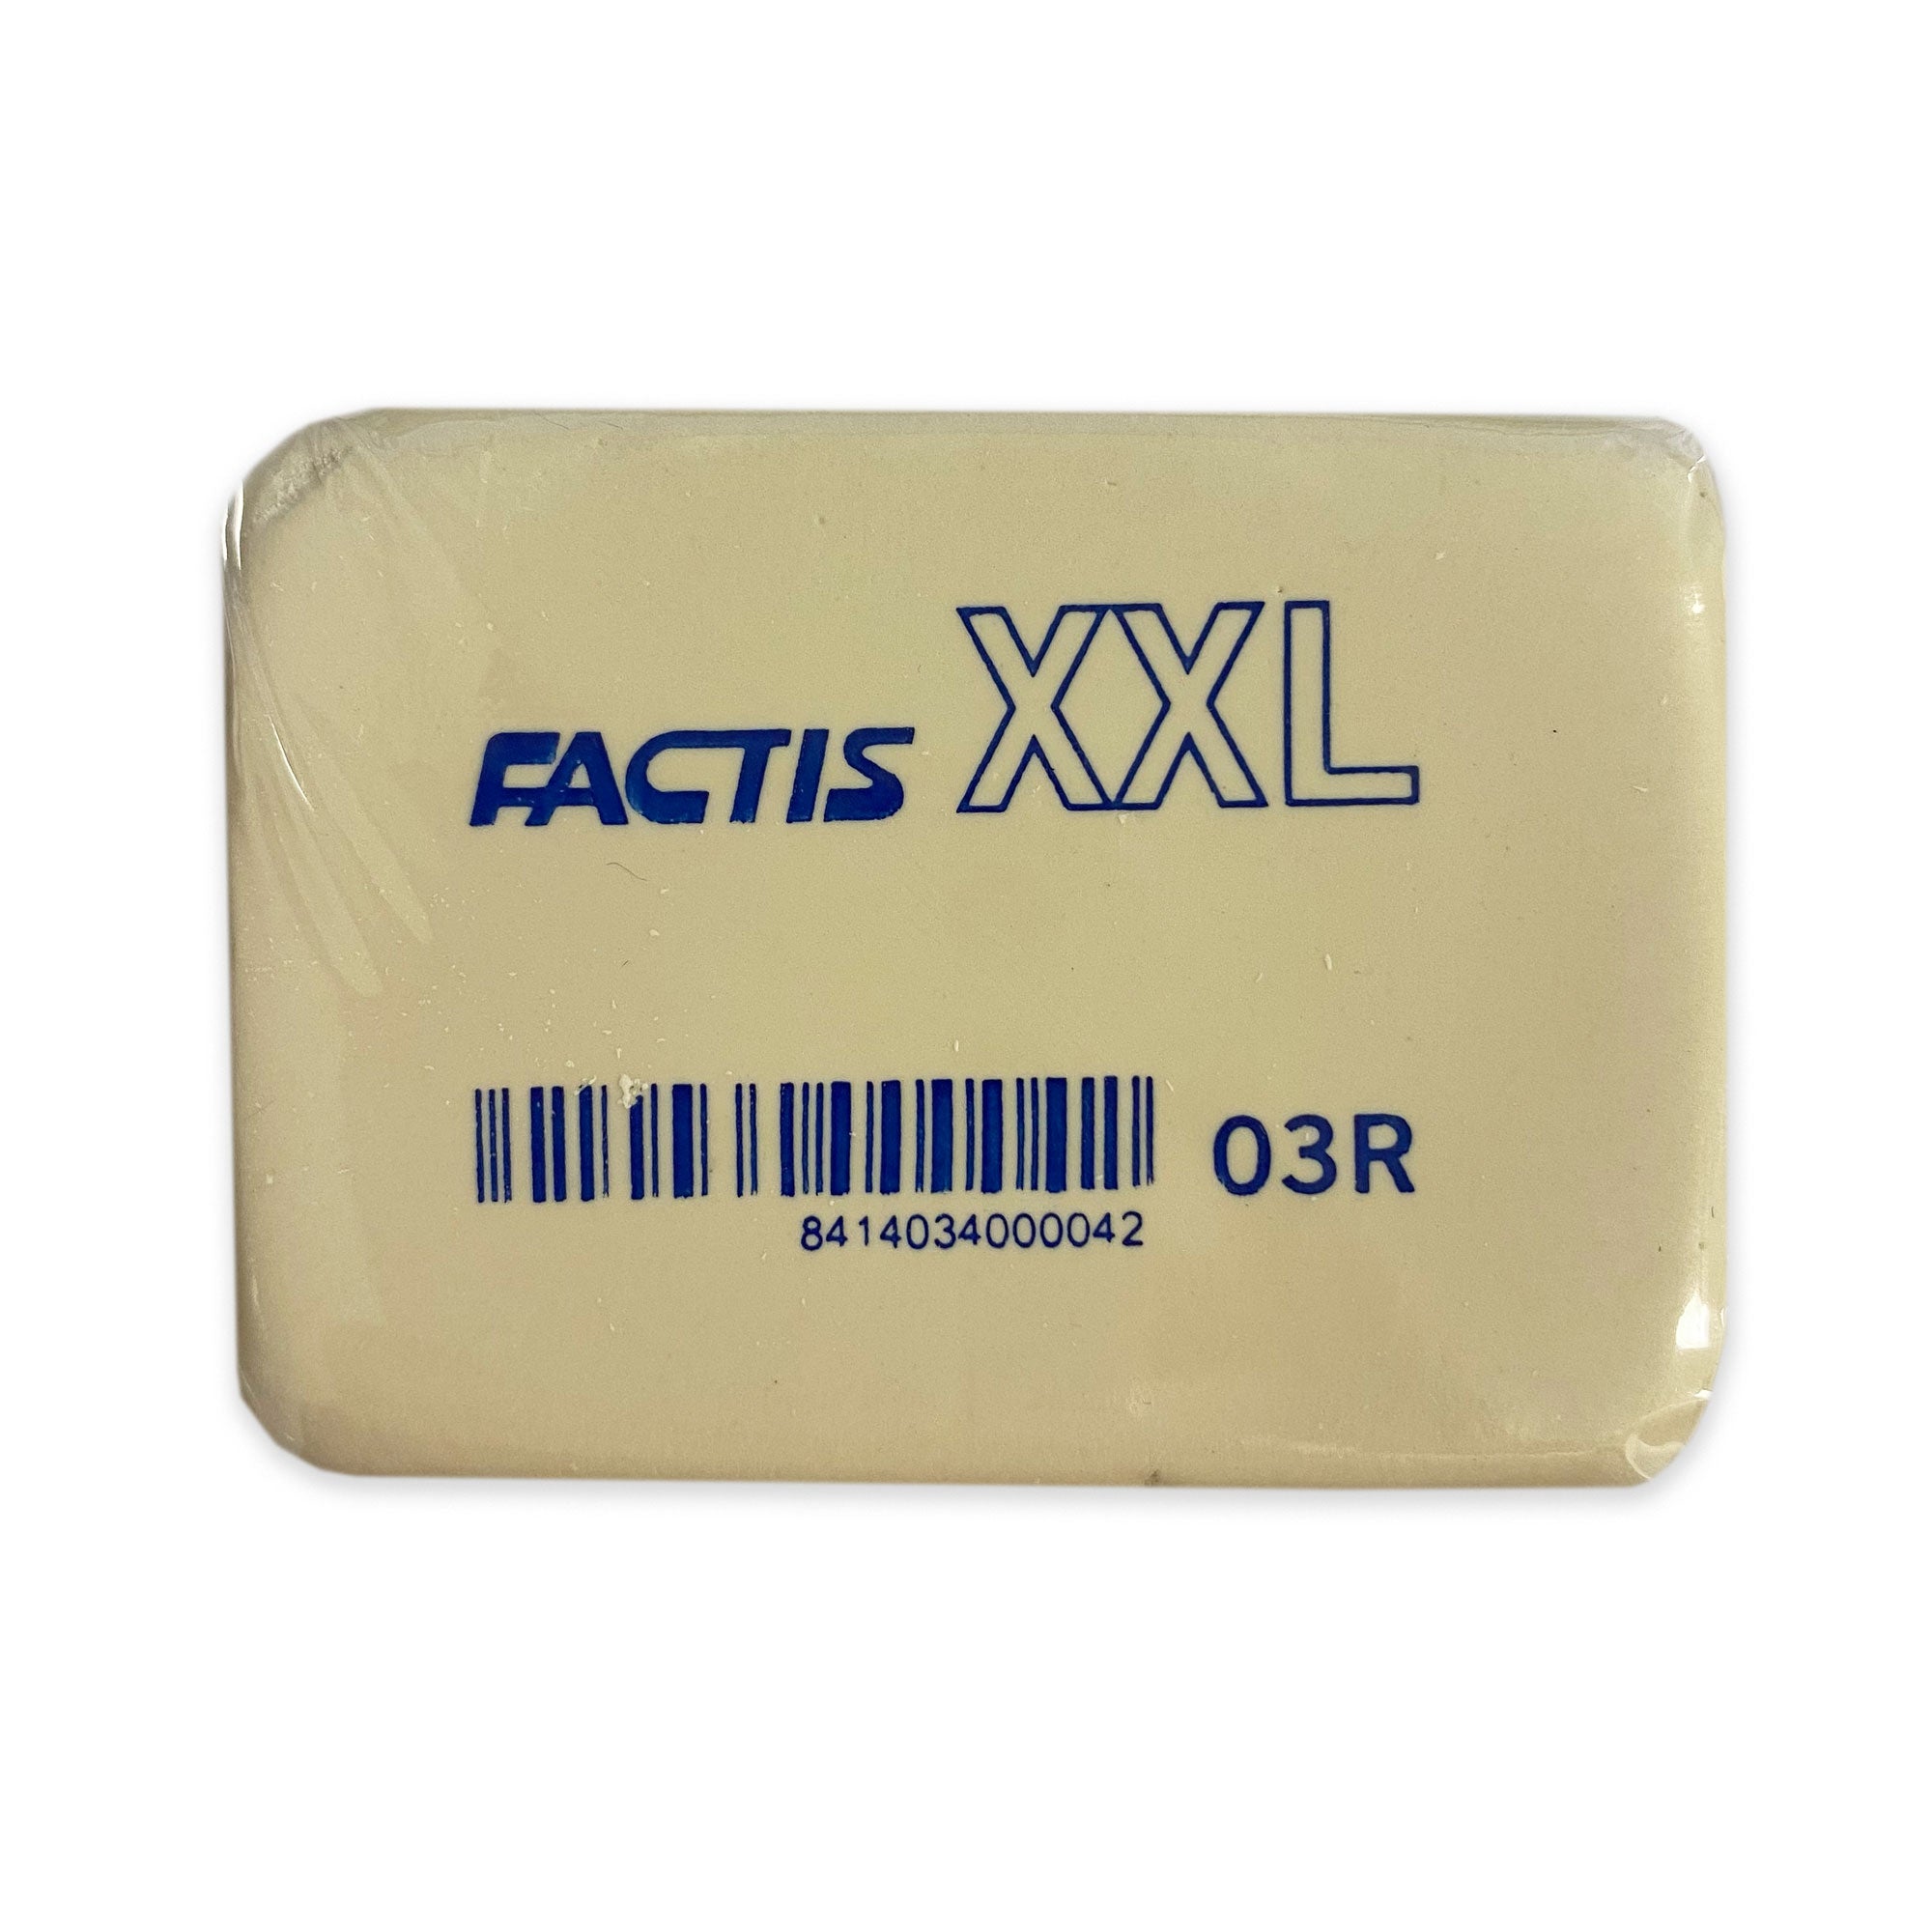 Factis Soft Synthetic Rubber Eraser XXL 03R